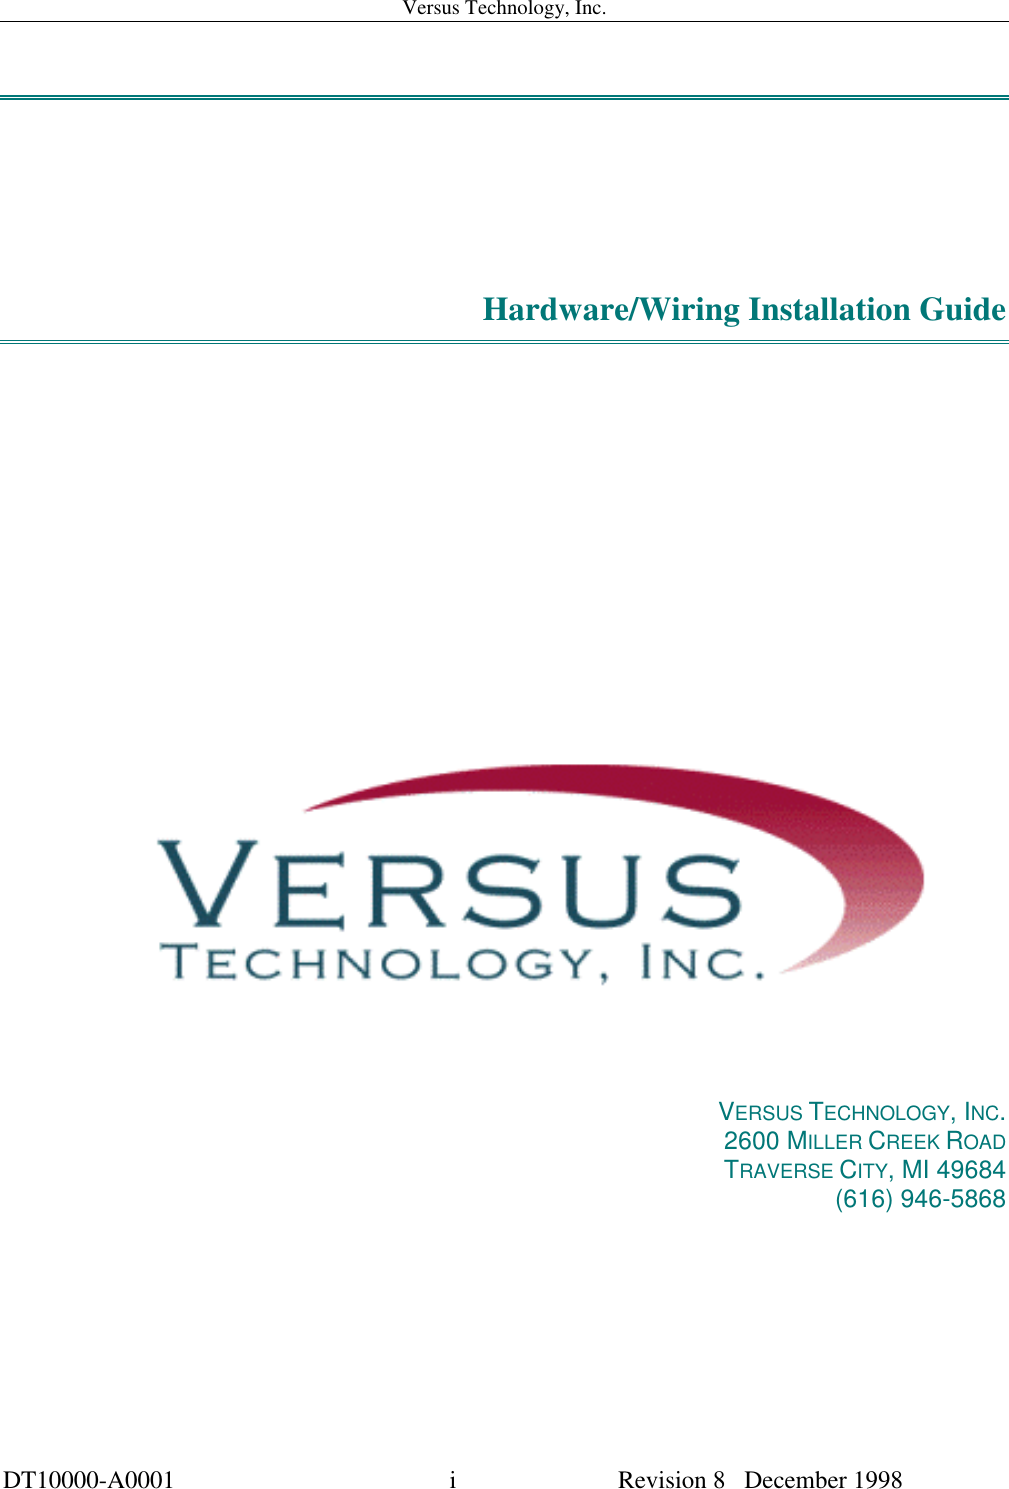 Versus Technology, Inc.DT10000-A0001 i Revision 8   December 1998Hardware/Wiring Installation GuideVERSUS TECHNOLOGY, INC.2600 MILLER CREEK ROADTRAVERSE CITY, MI 49684(616) 946-5868